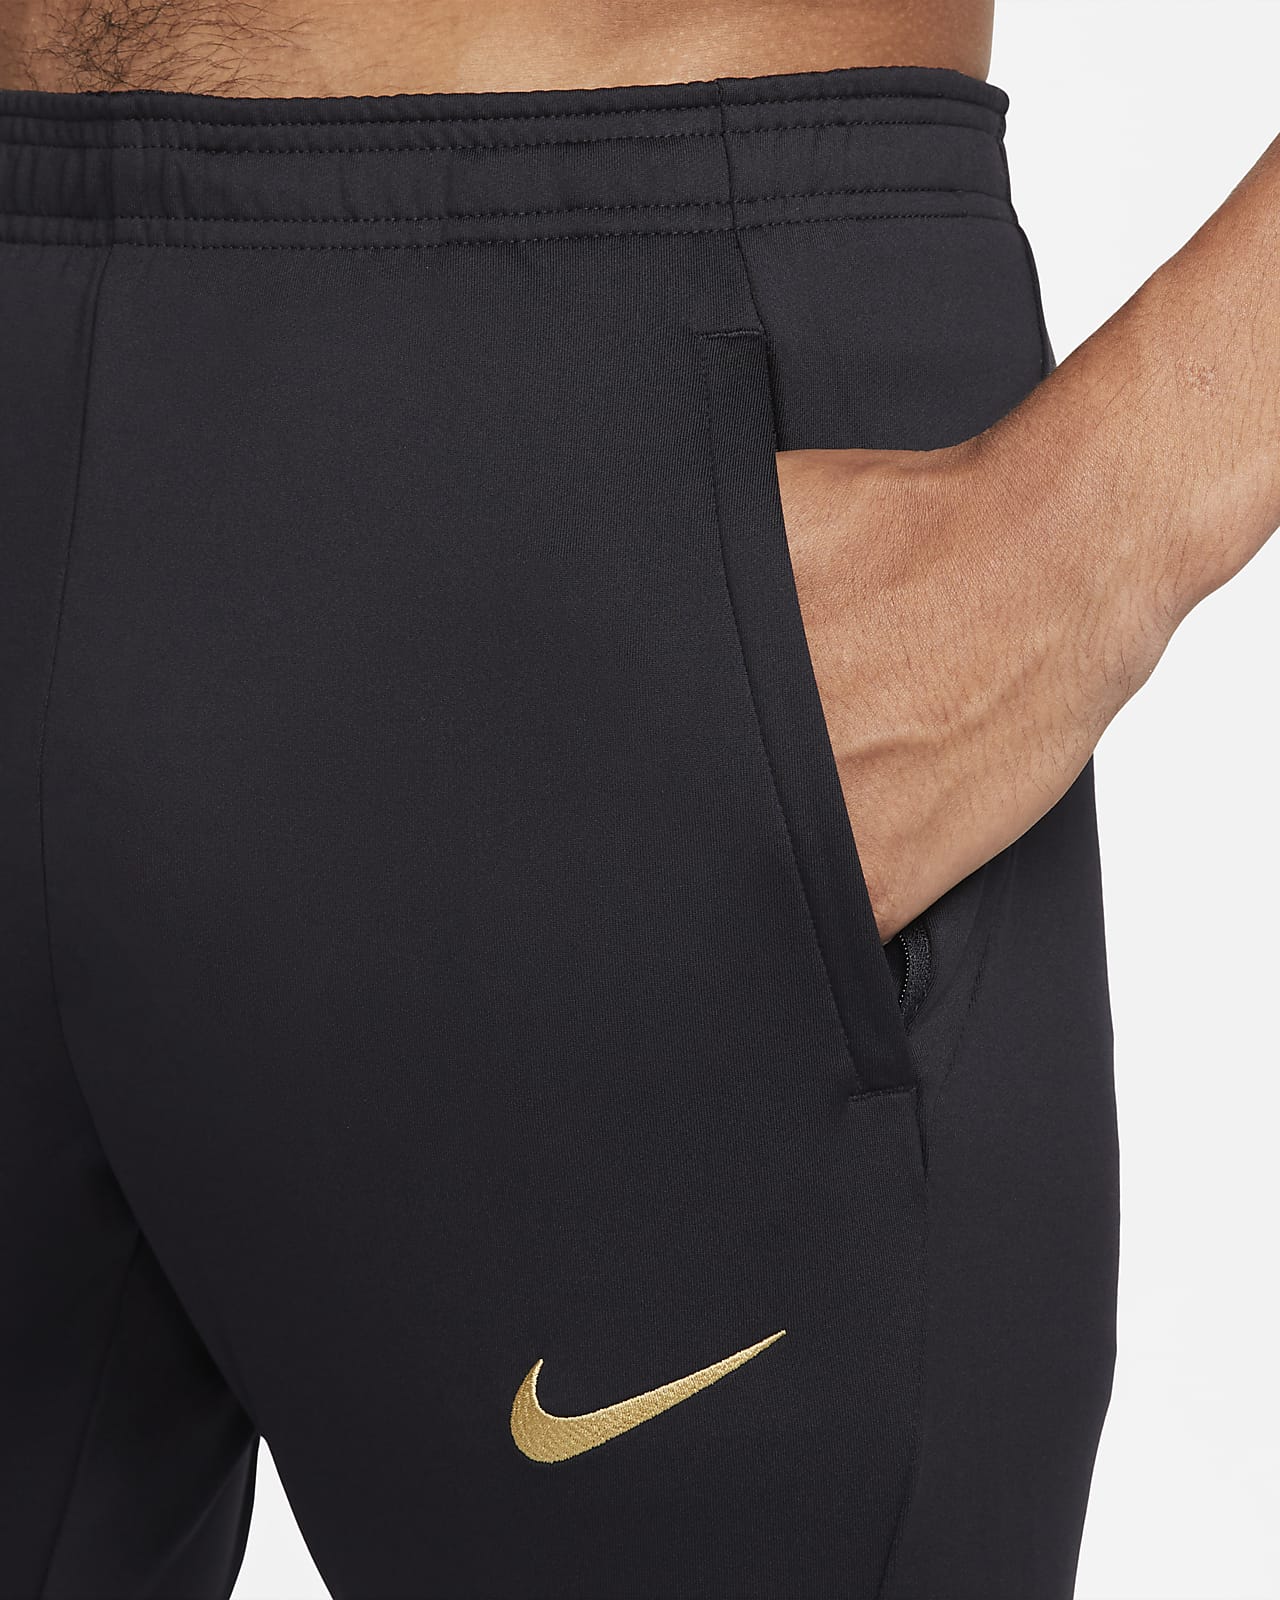 Chelsea F.C. Strike Men's Nike Dri-FIT Knit Football Pants. Nike AU